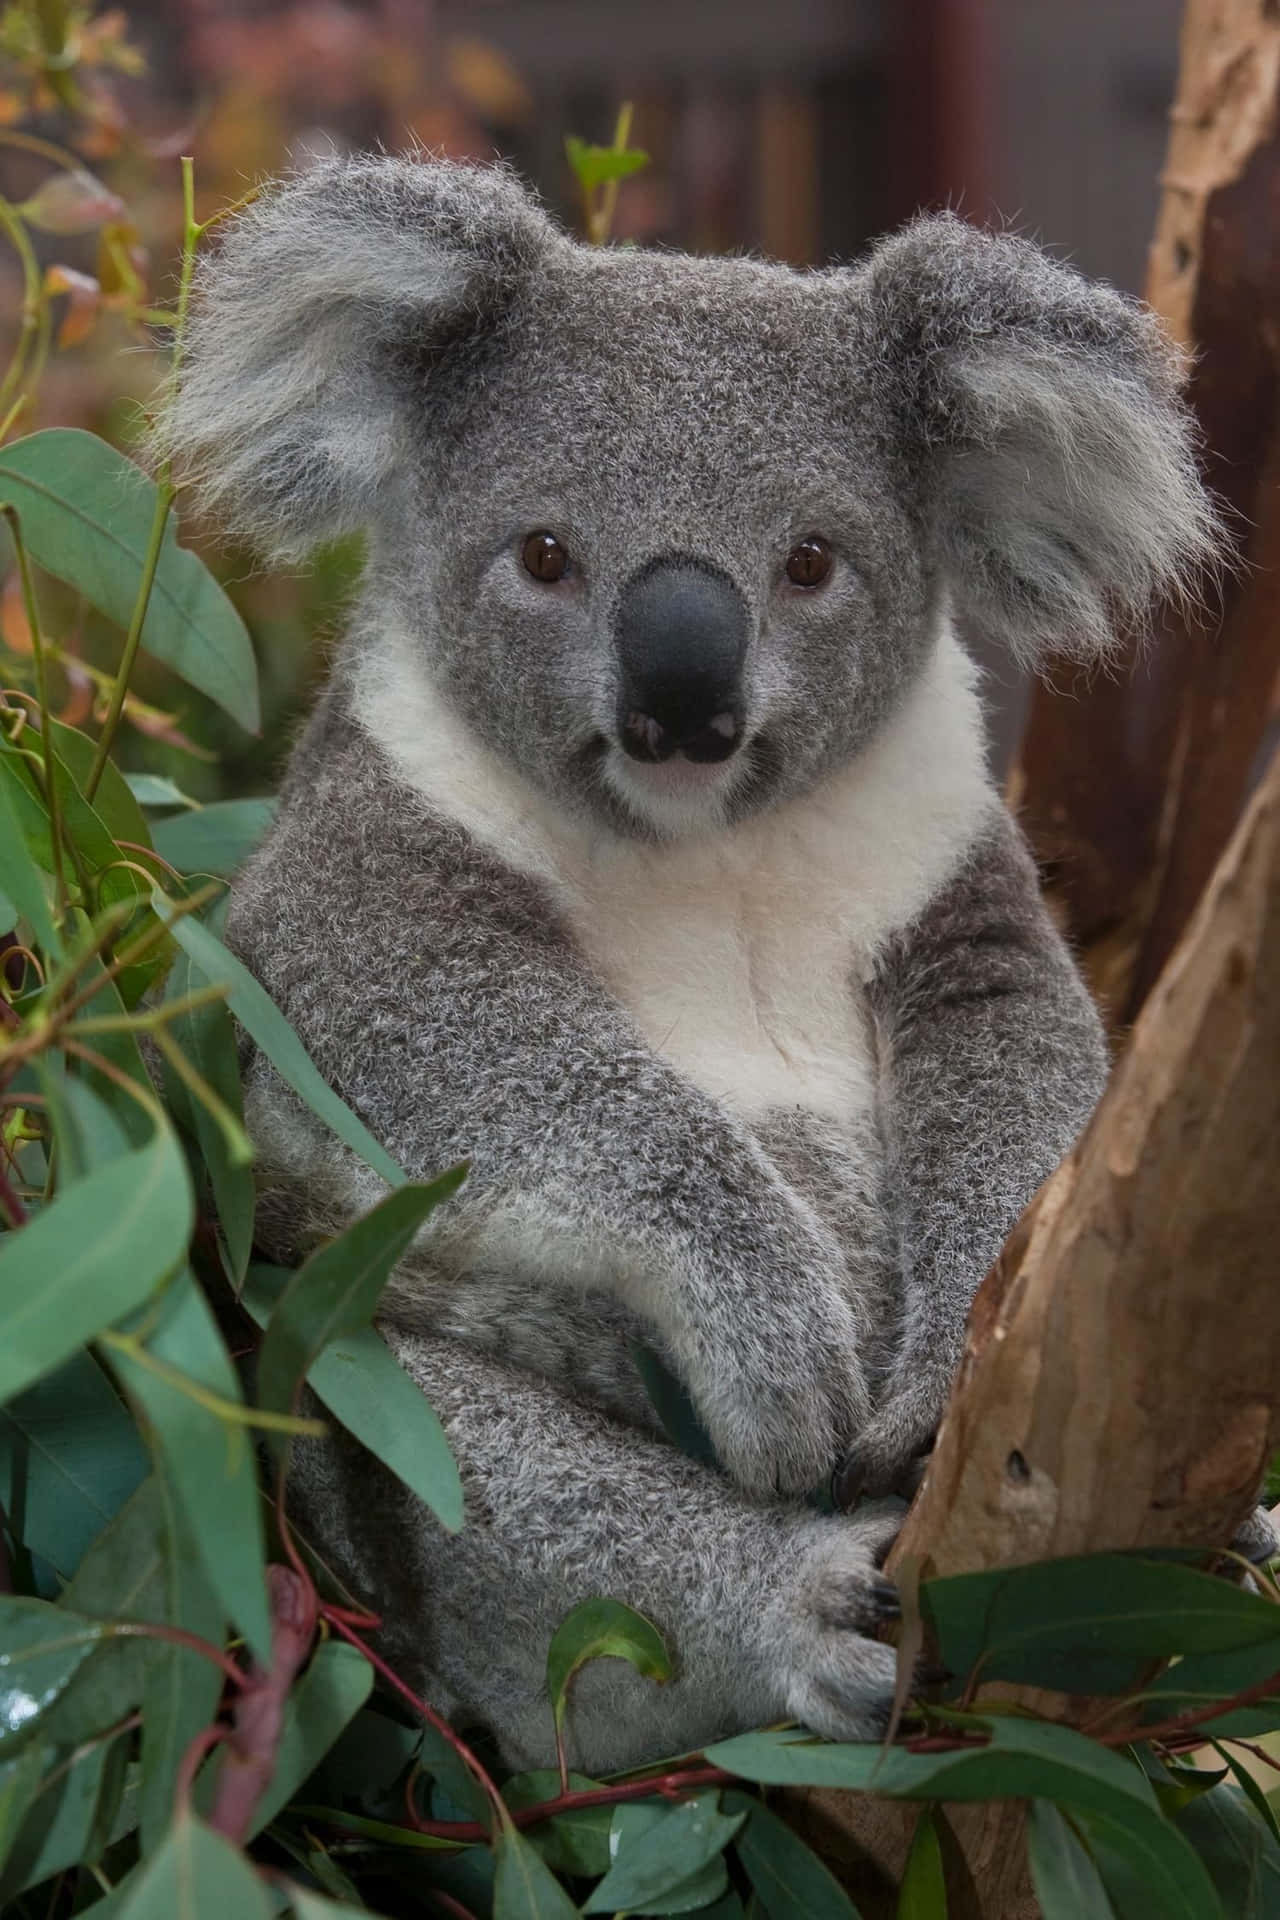 Cuddly Koala Bear Snuggling a Tree